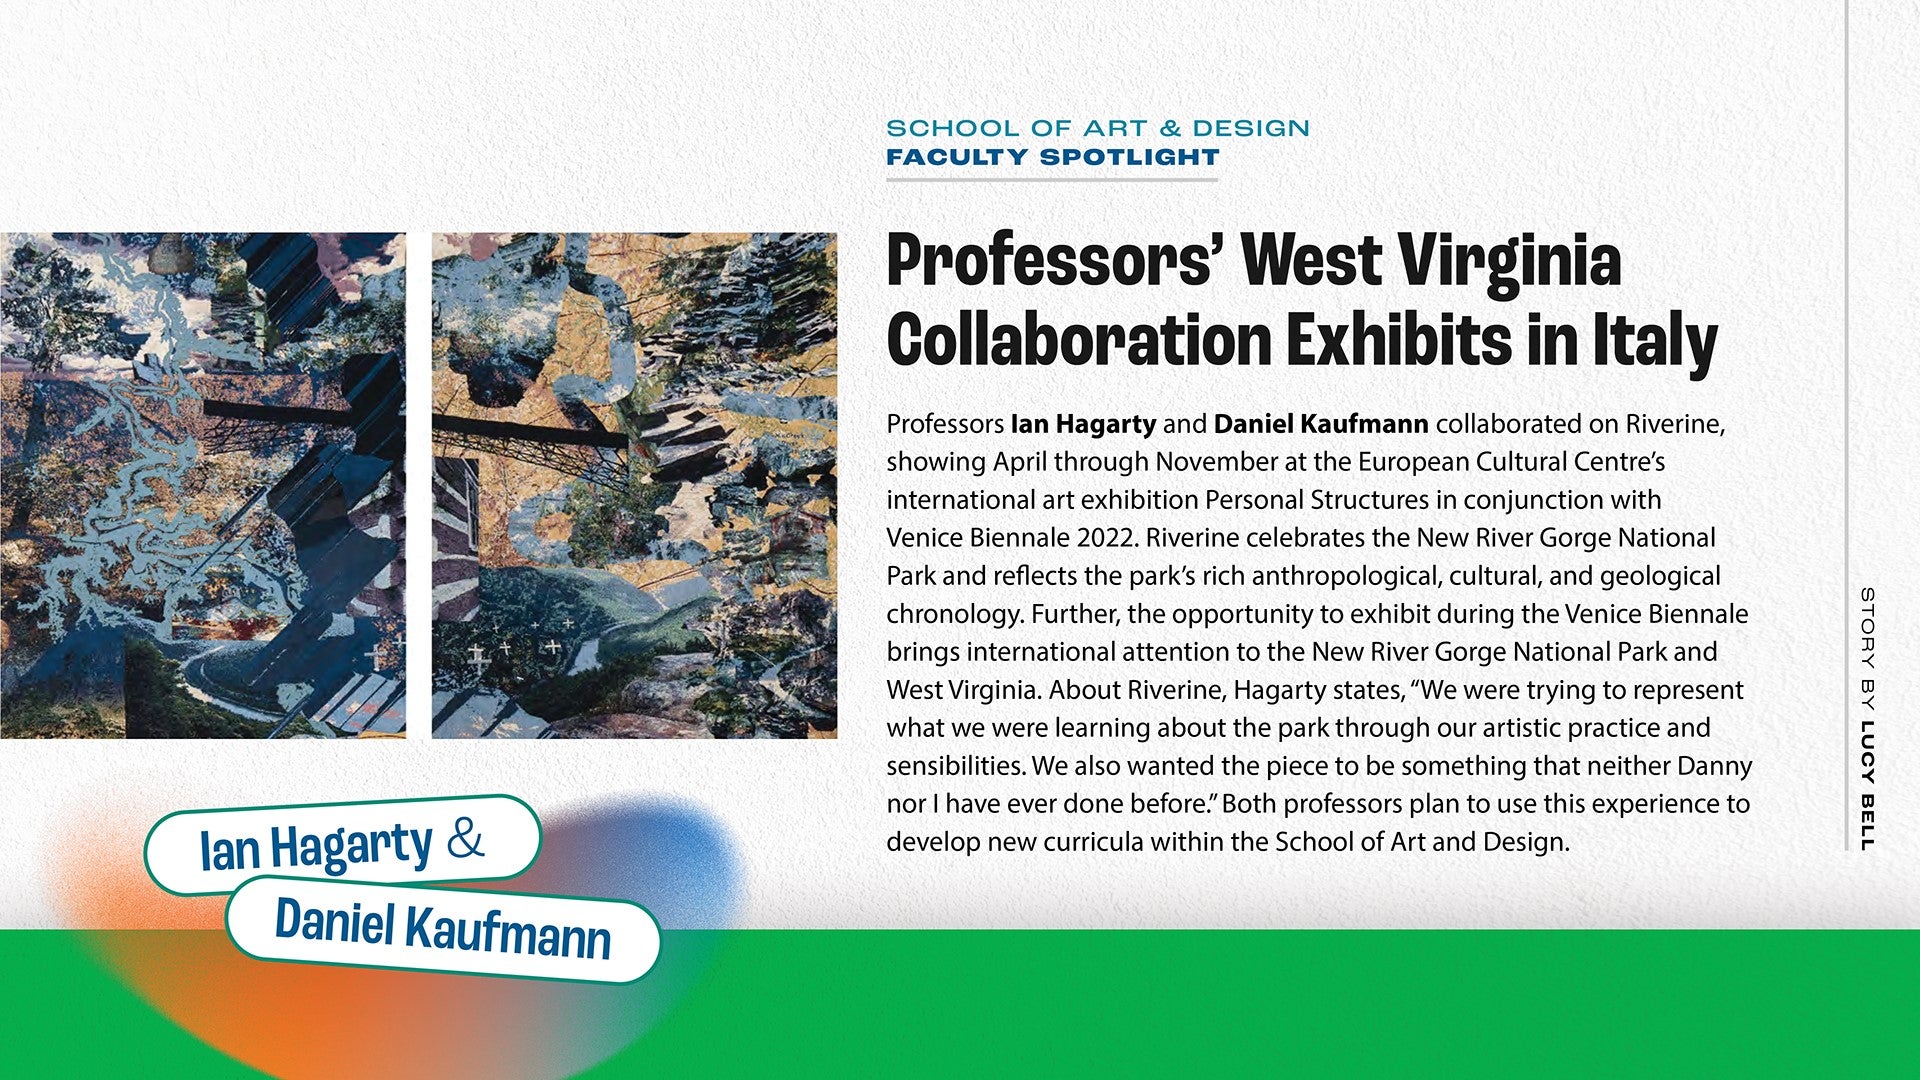 https://www.marshall.edu/art/files/Hagarty-and-Kaufmann-Professors-West-Virginia-Collaboration-Exhibits-in-Italy.jpg